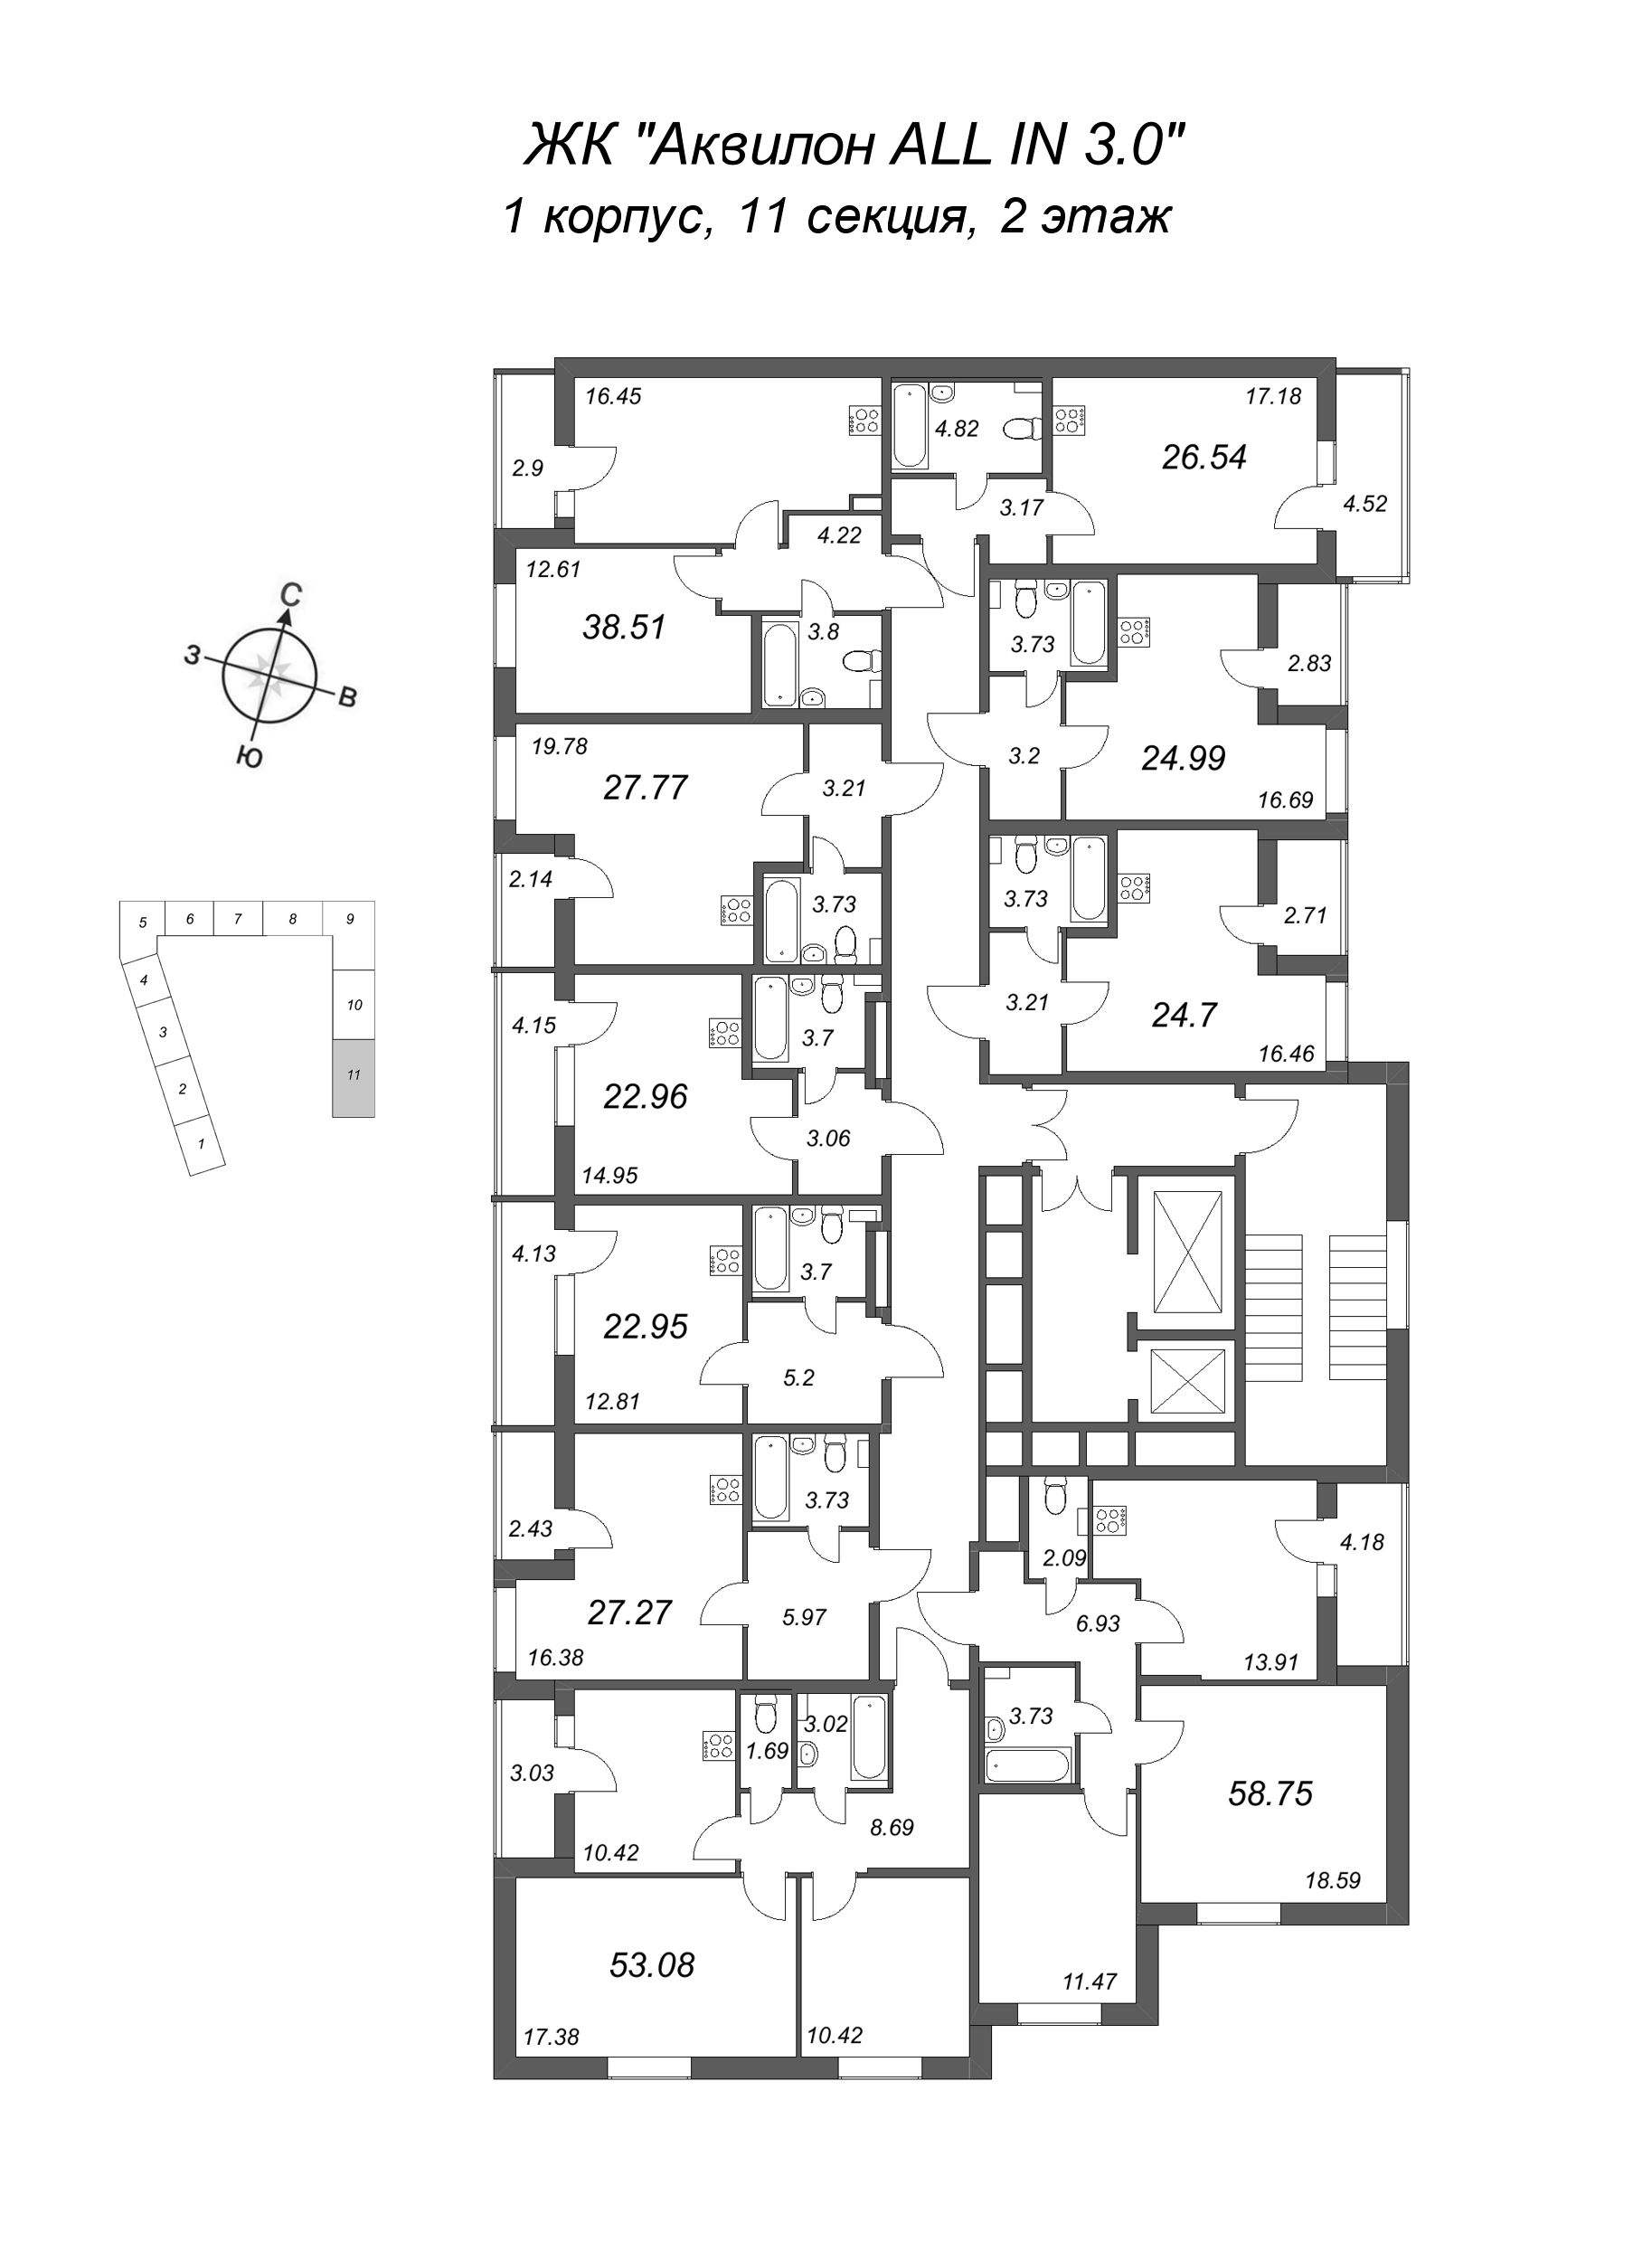 2-комнатная (Евро) квартира, 38.51 м² - планировка этажа